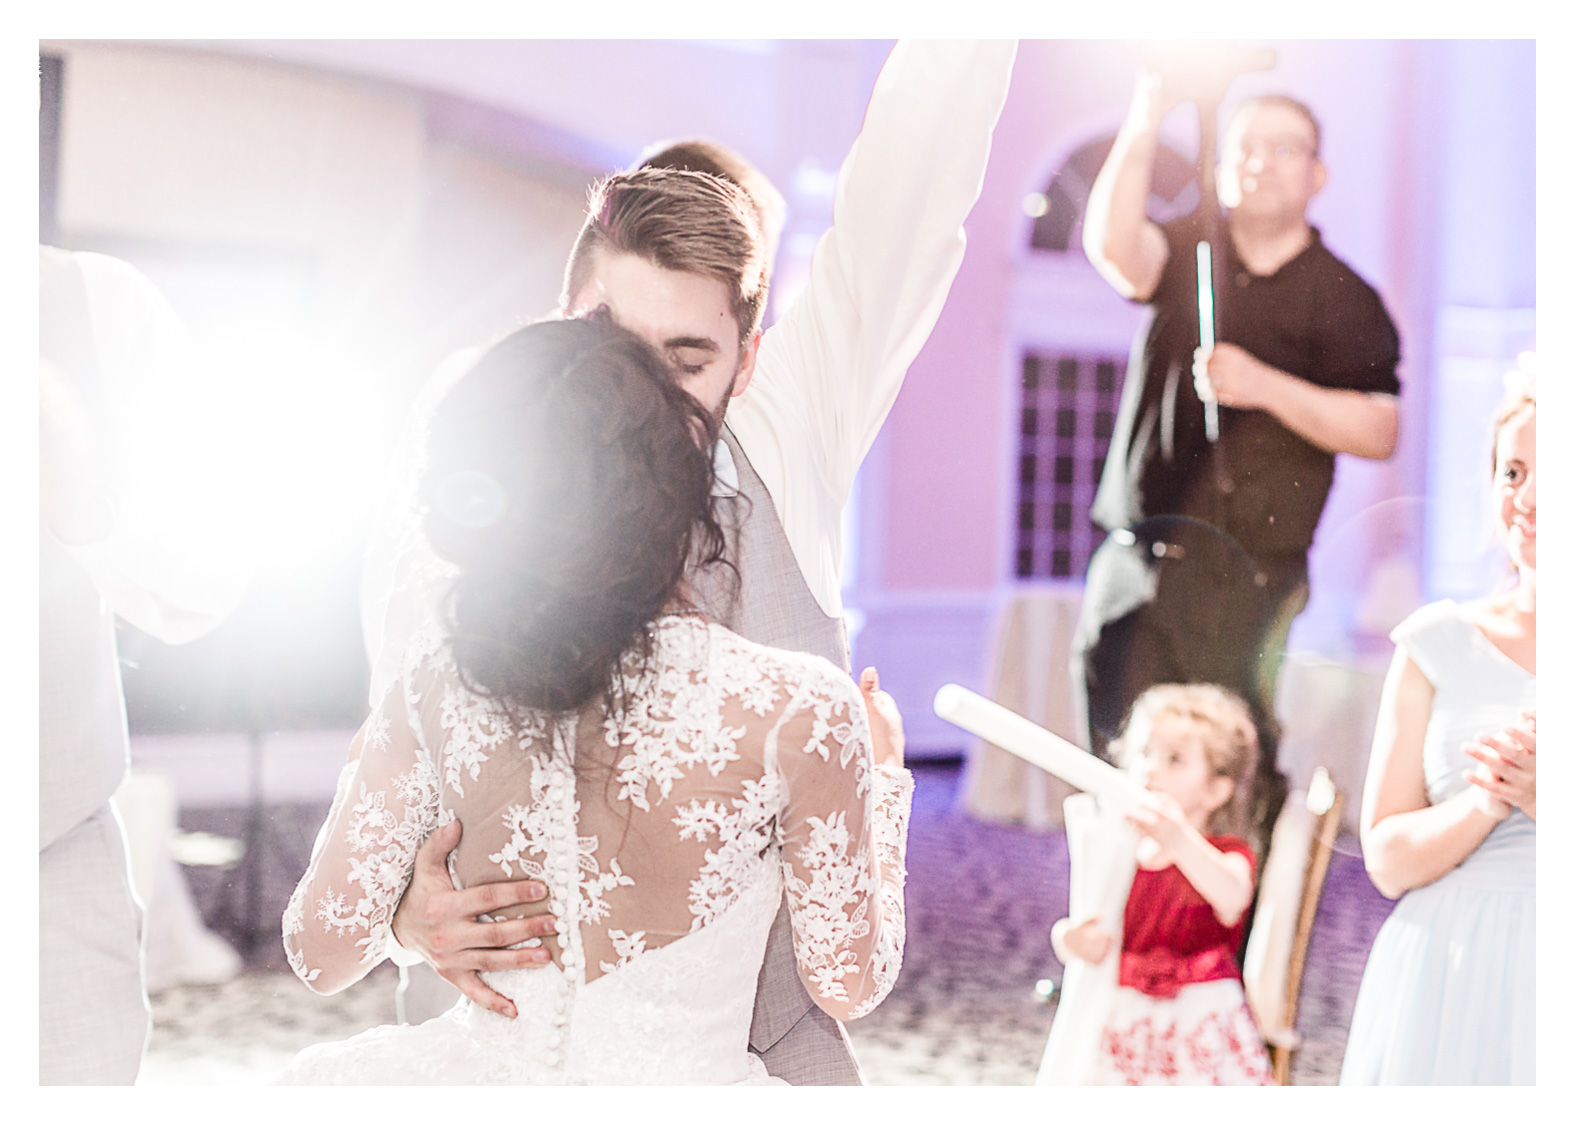 foxchase-manor-wedding-reception-open-dancing-bride-groom-kiss.jpg